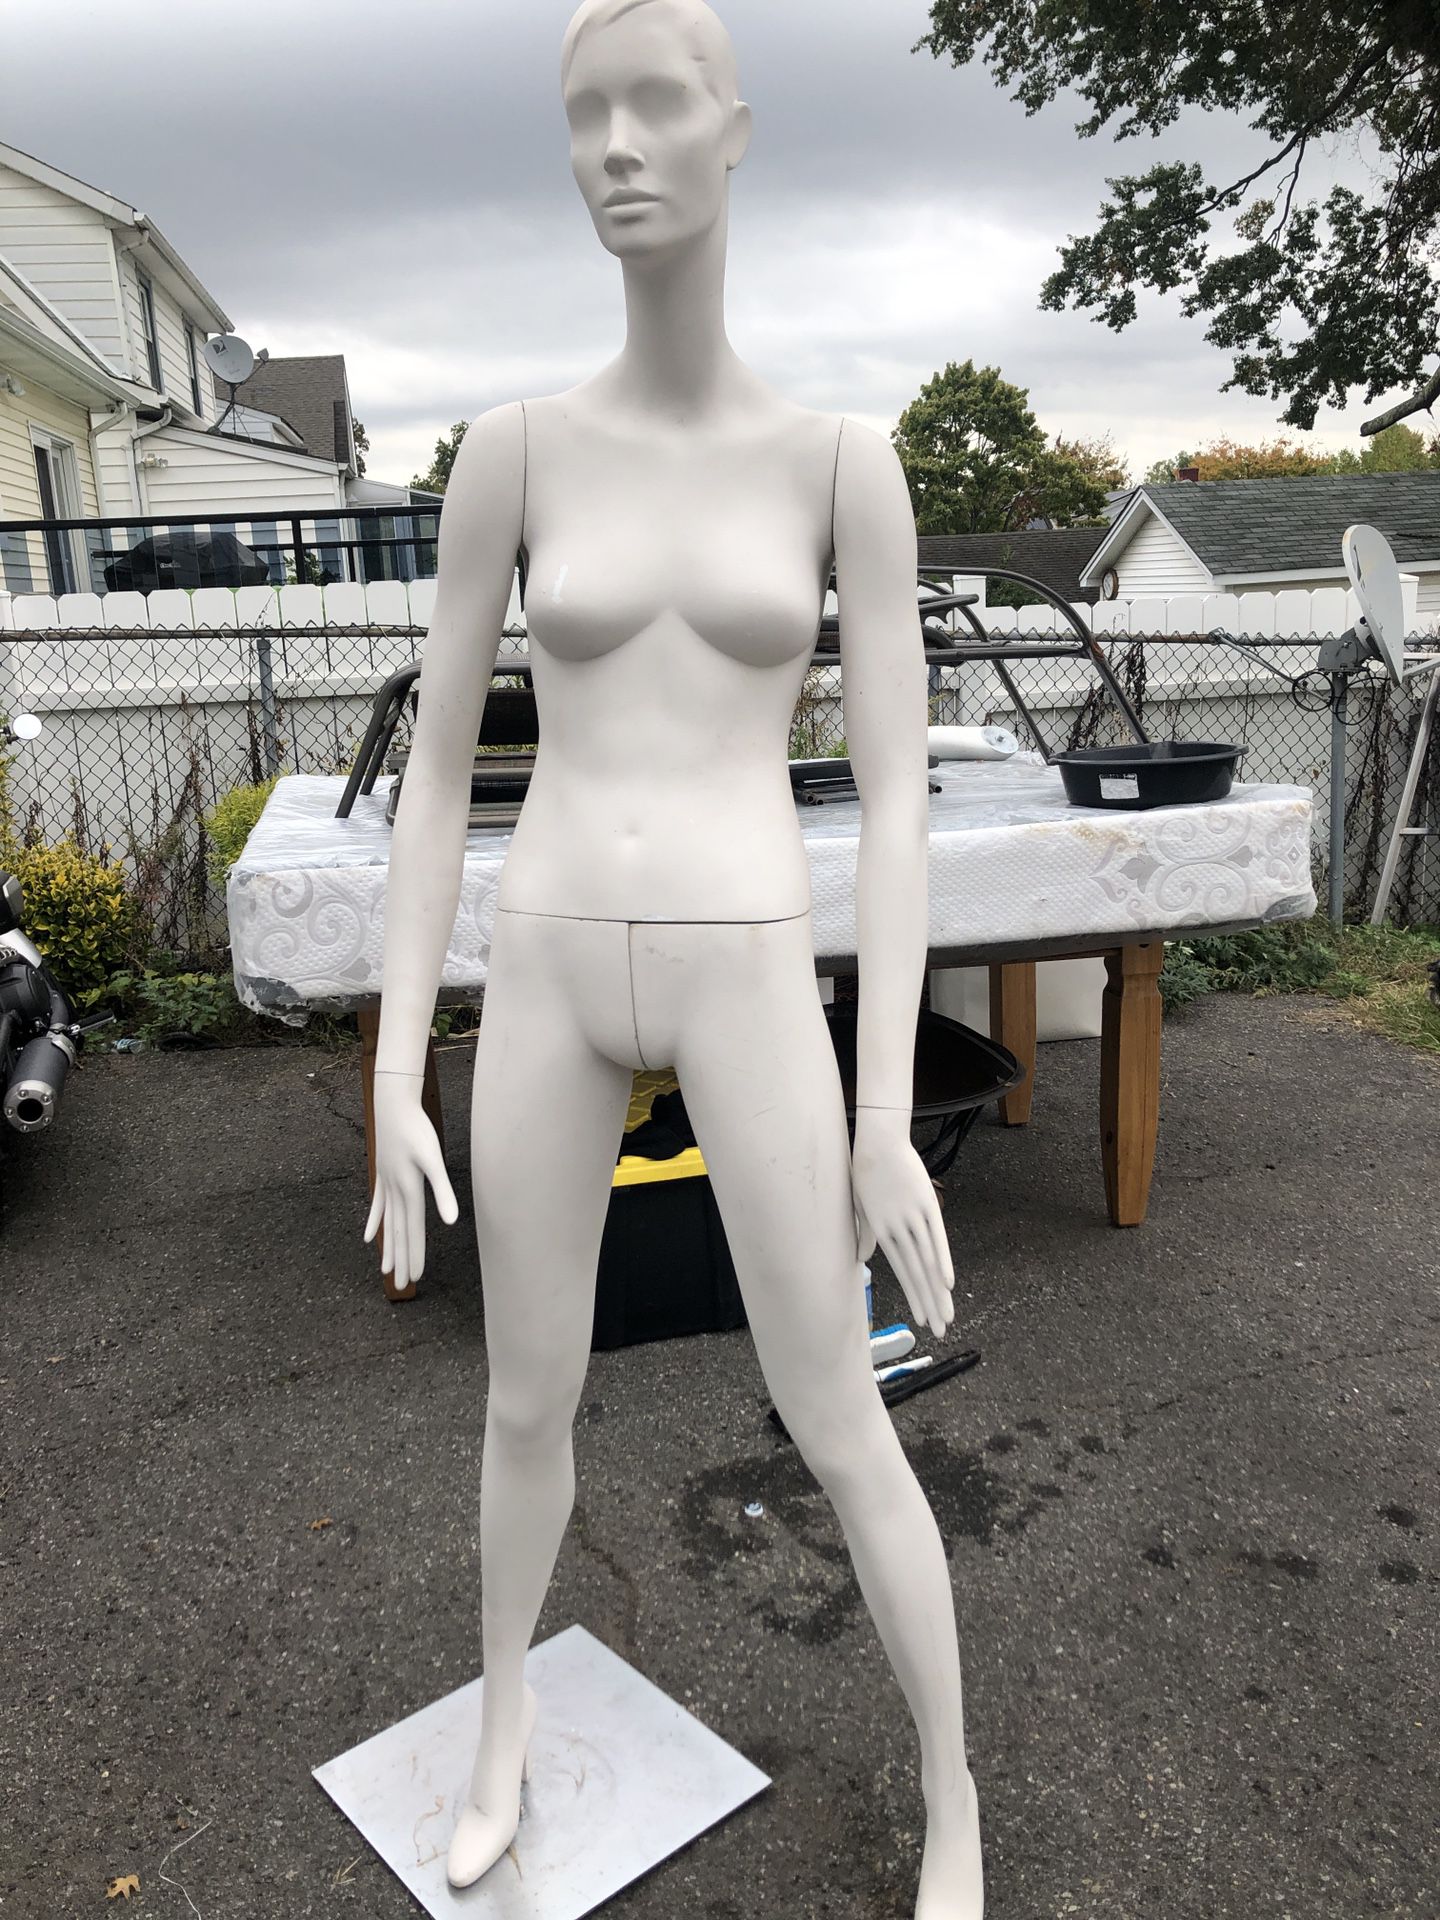 3 mannequins for sale